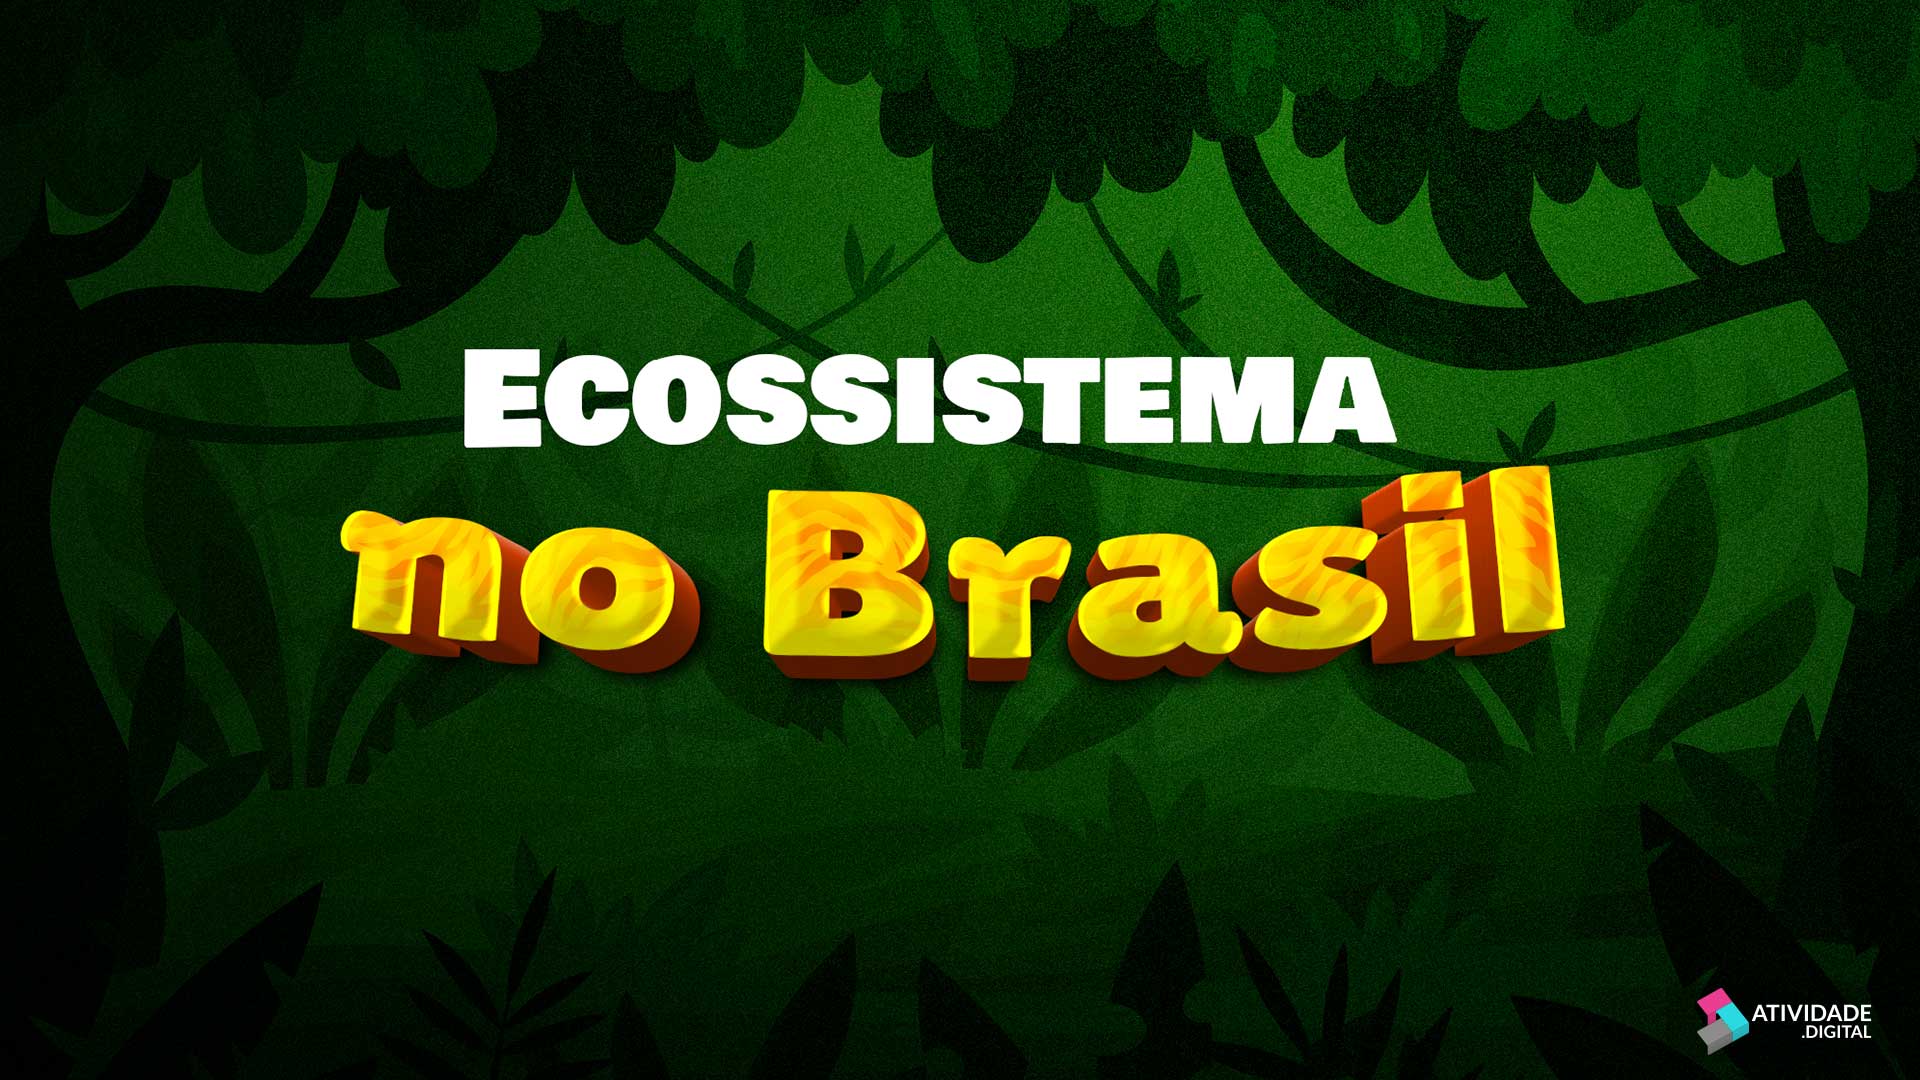 Ecossistema no Brasil